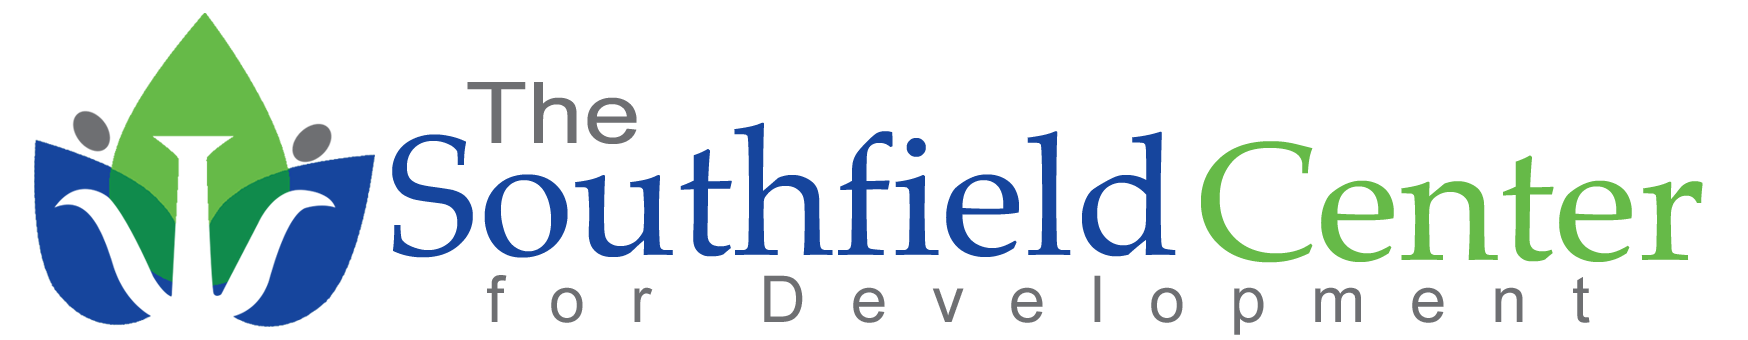 The Southfield Center logo